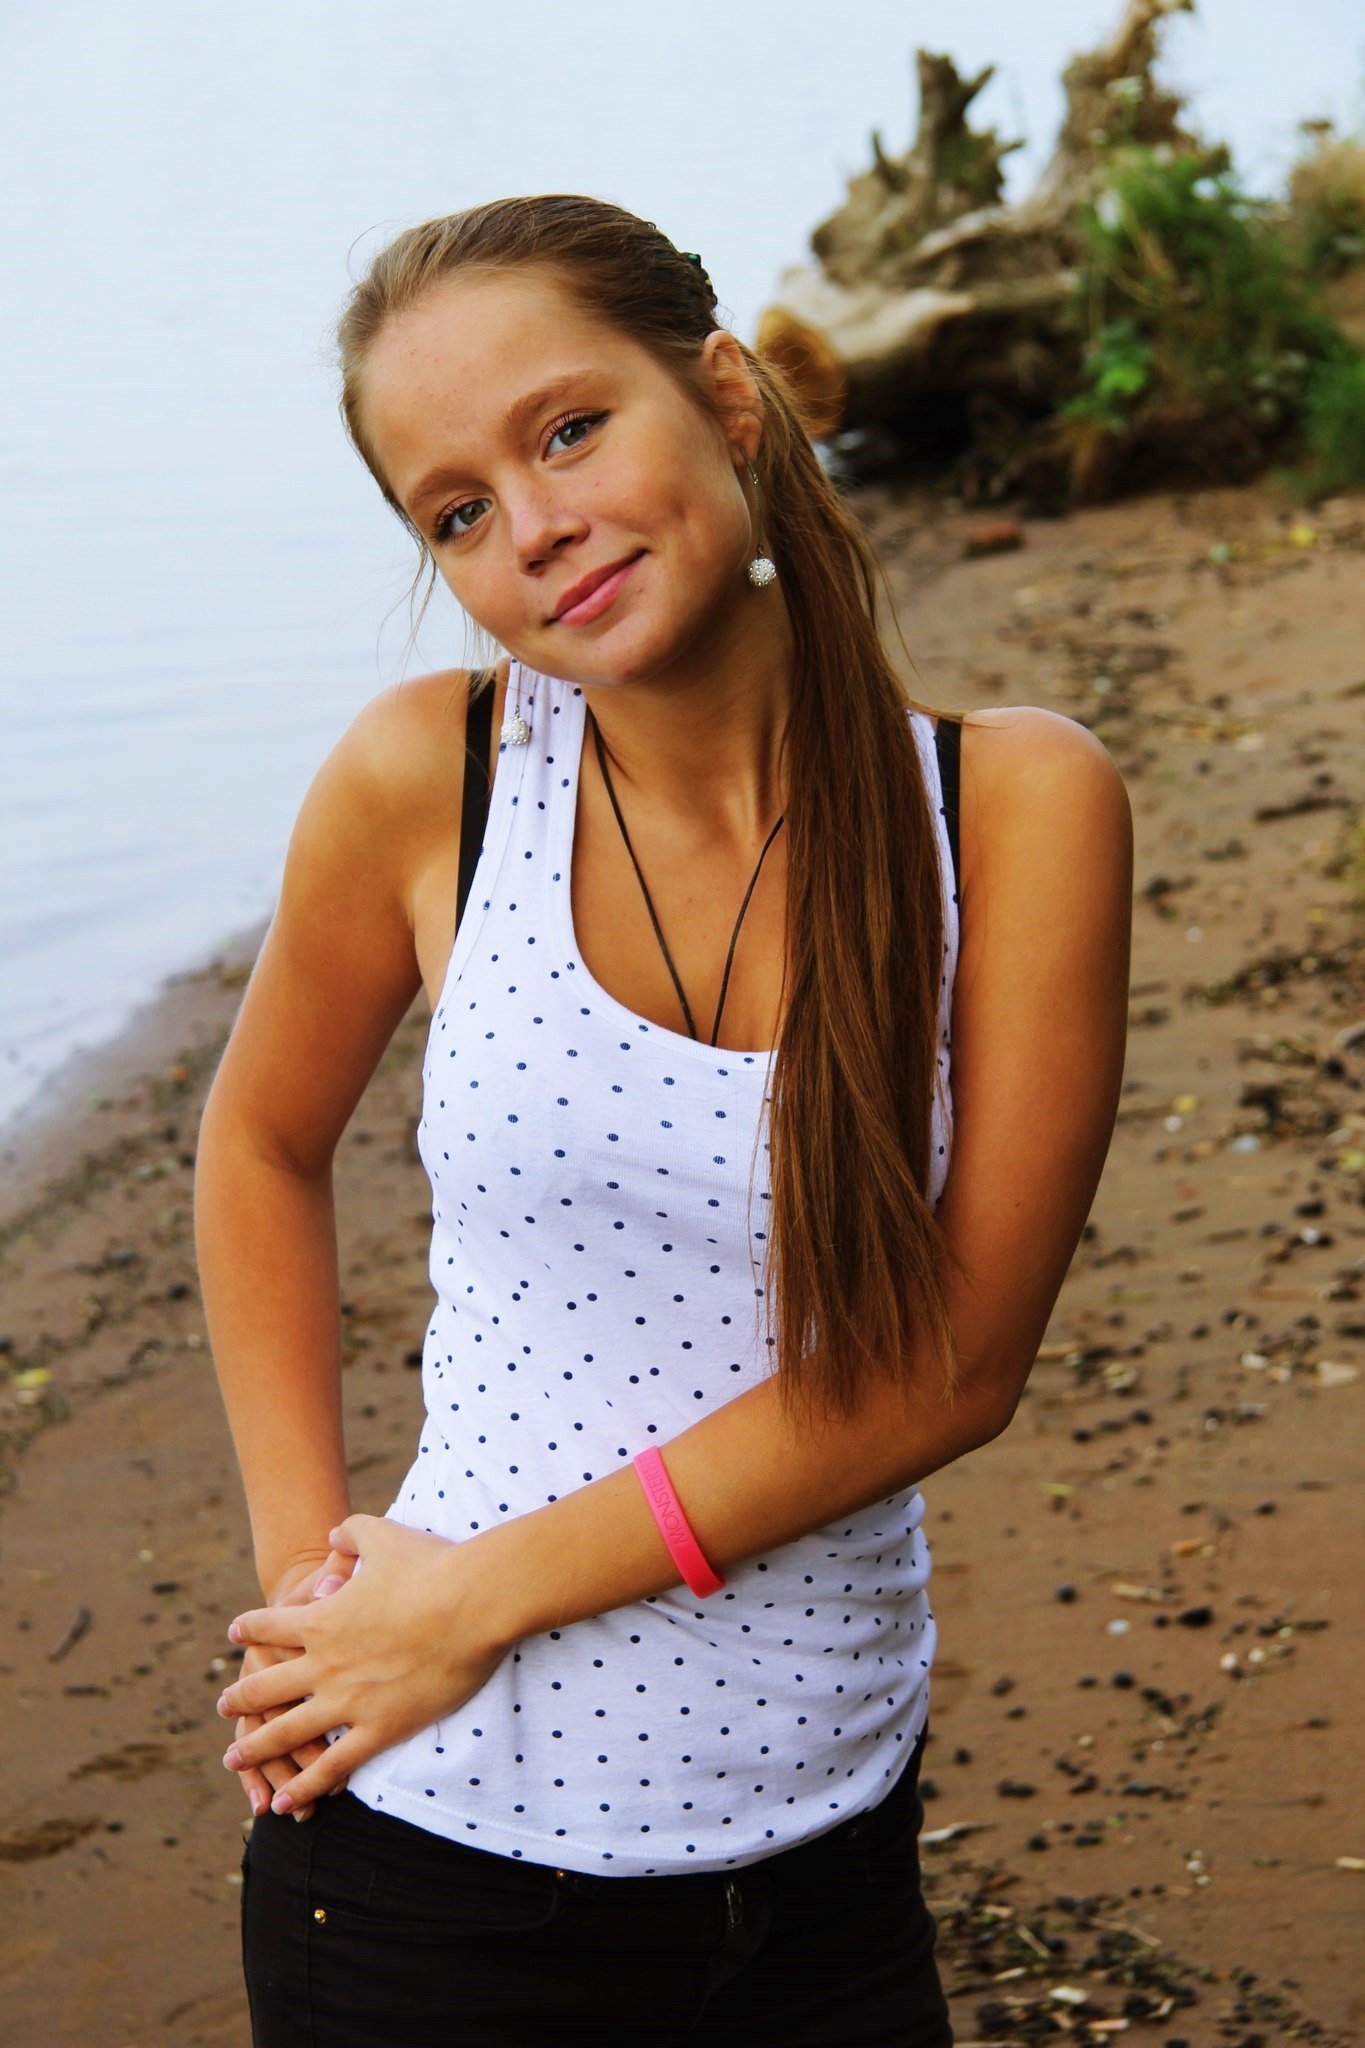 Девушка младше 14 лет. Алиса Князева. Красивые девочки подростки. Красавицы 12 лет. Девушка 14 лет.